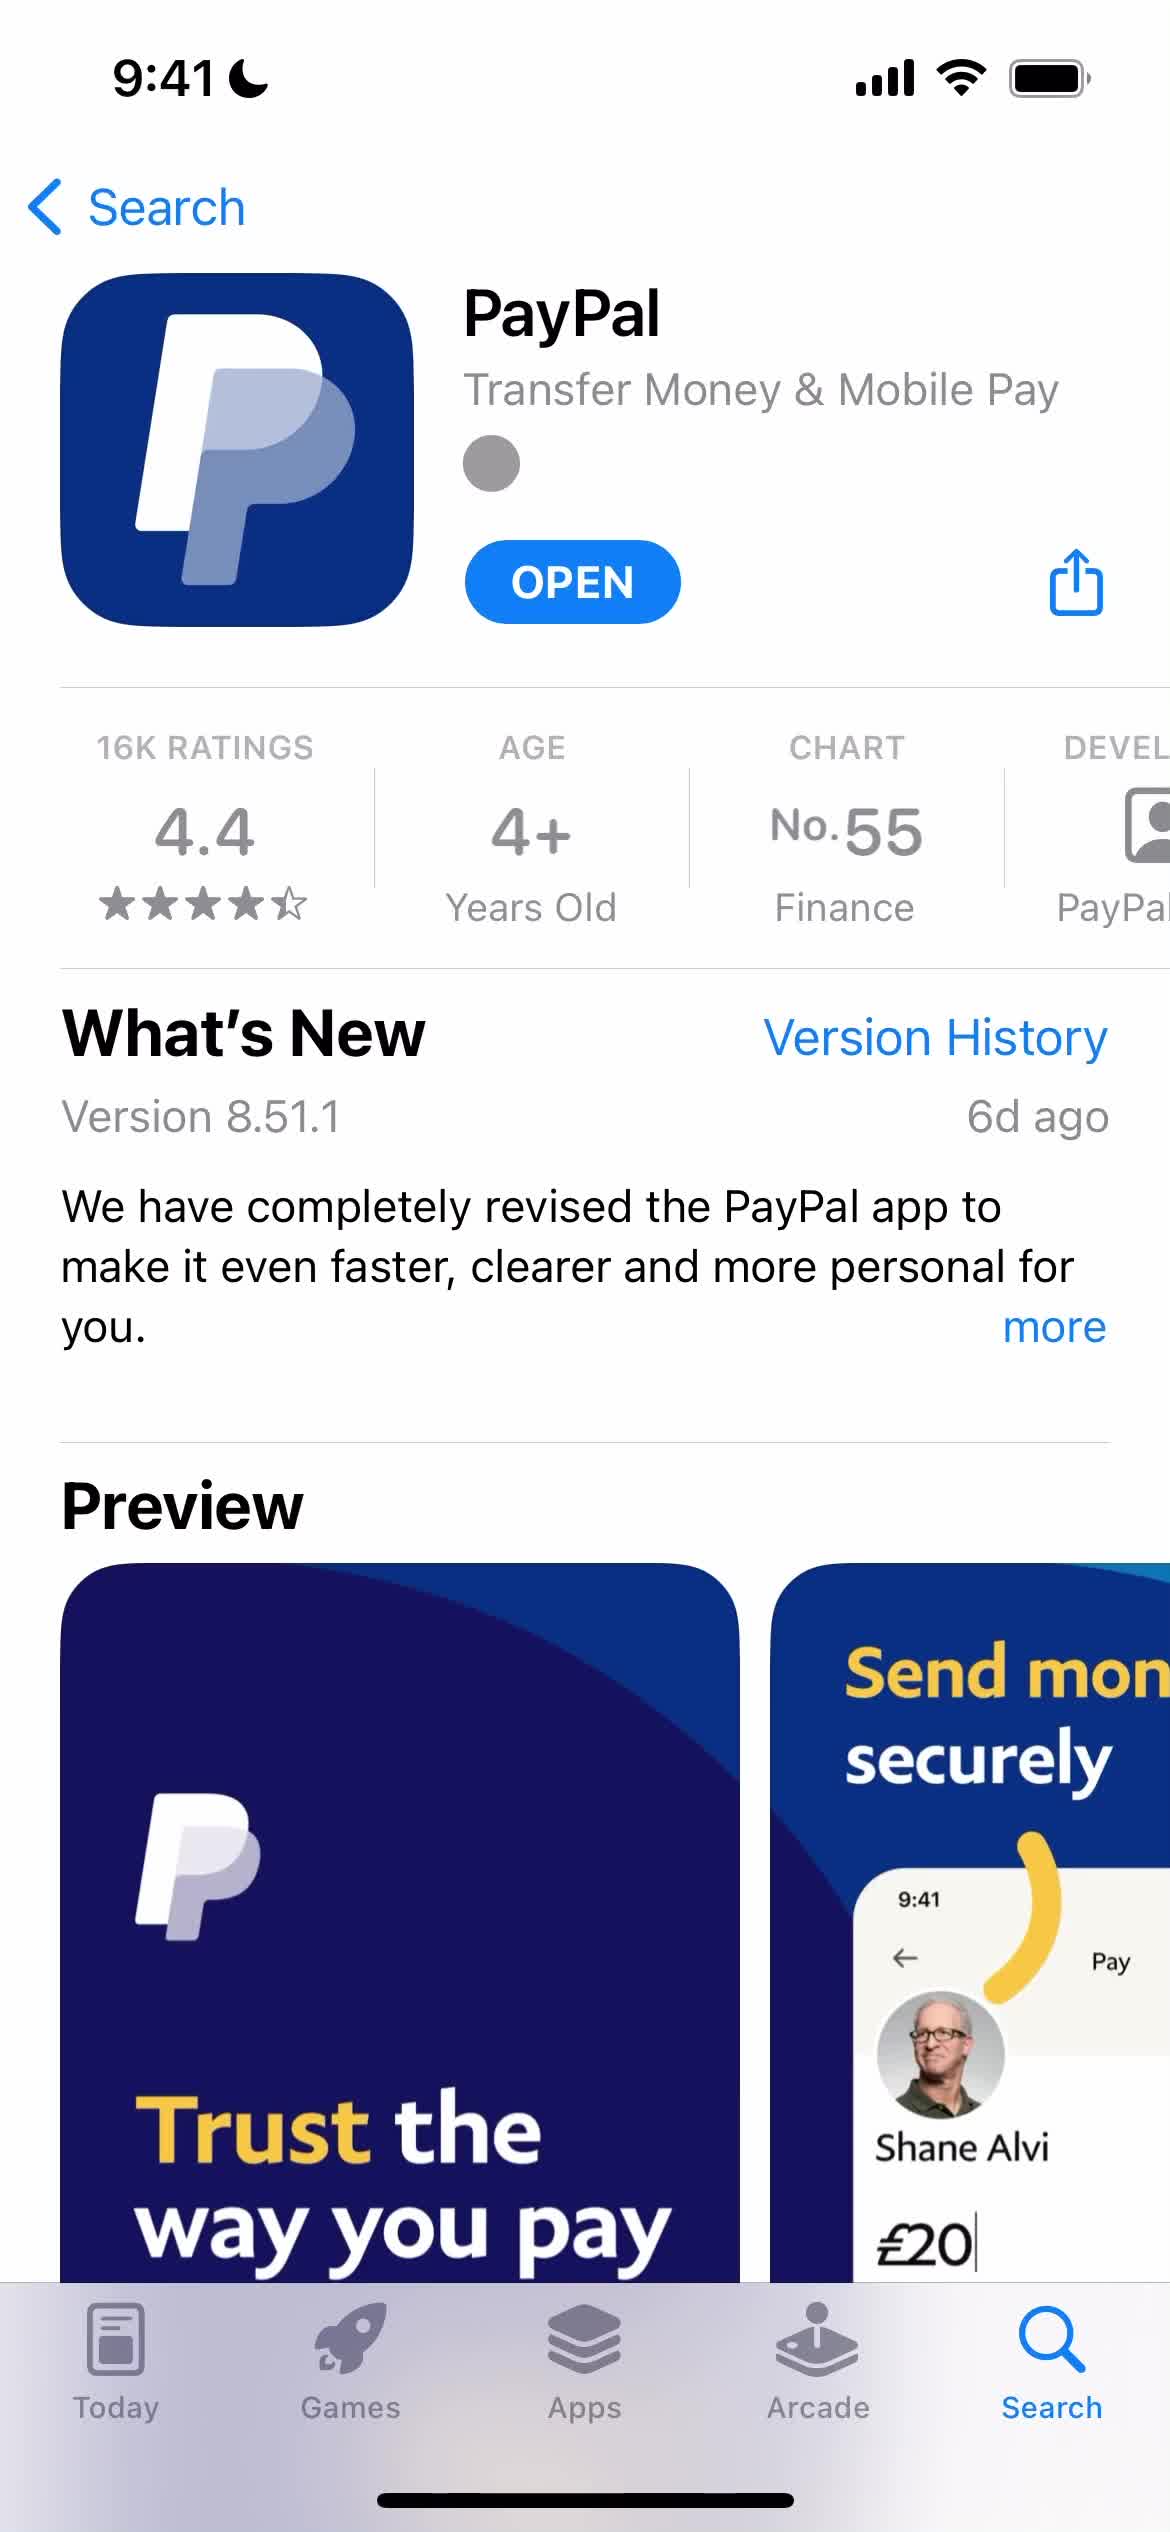 PayPal app store listing screenshot